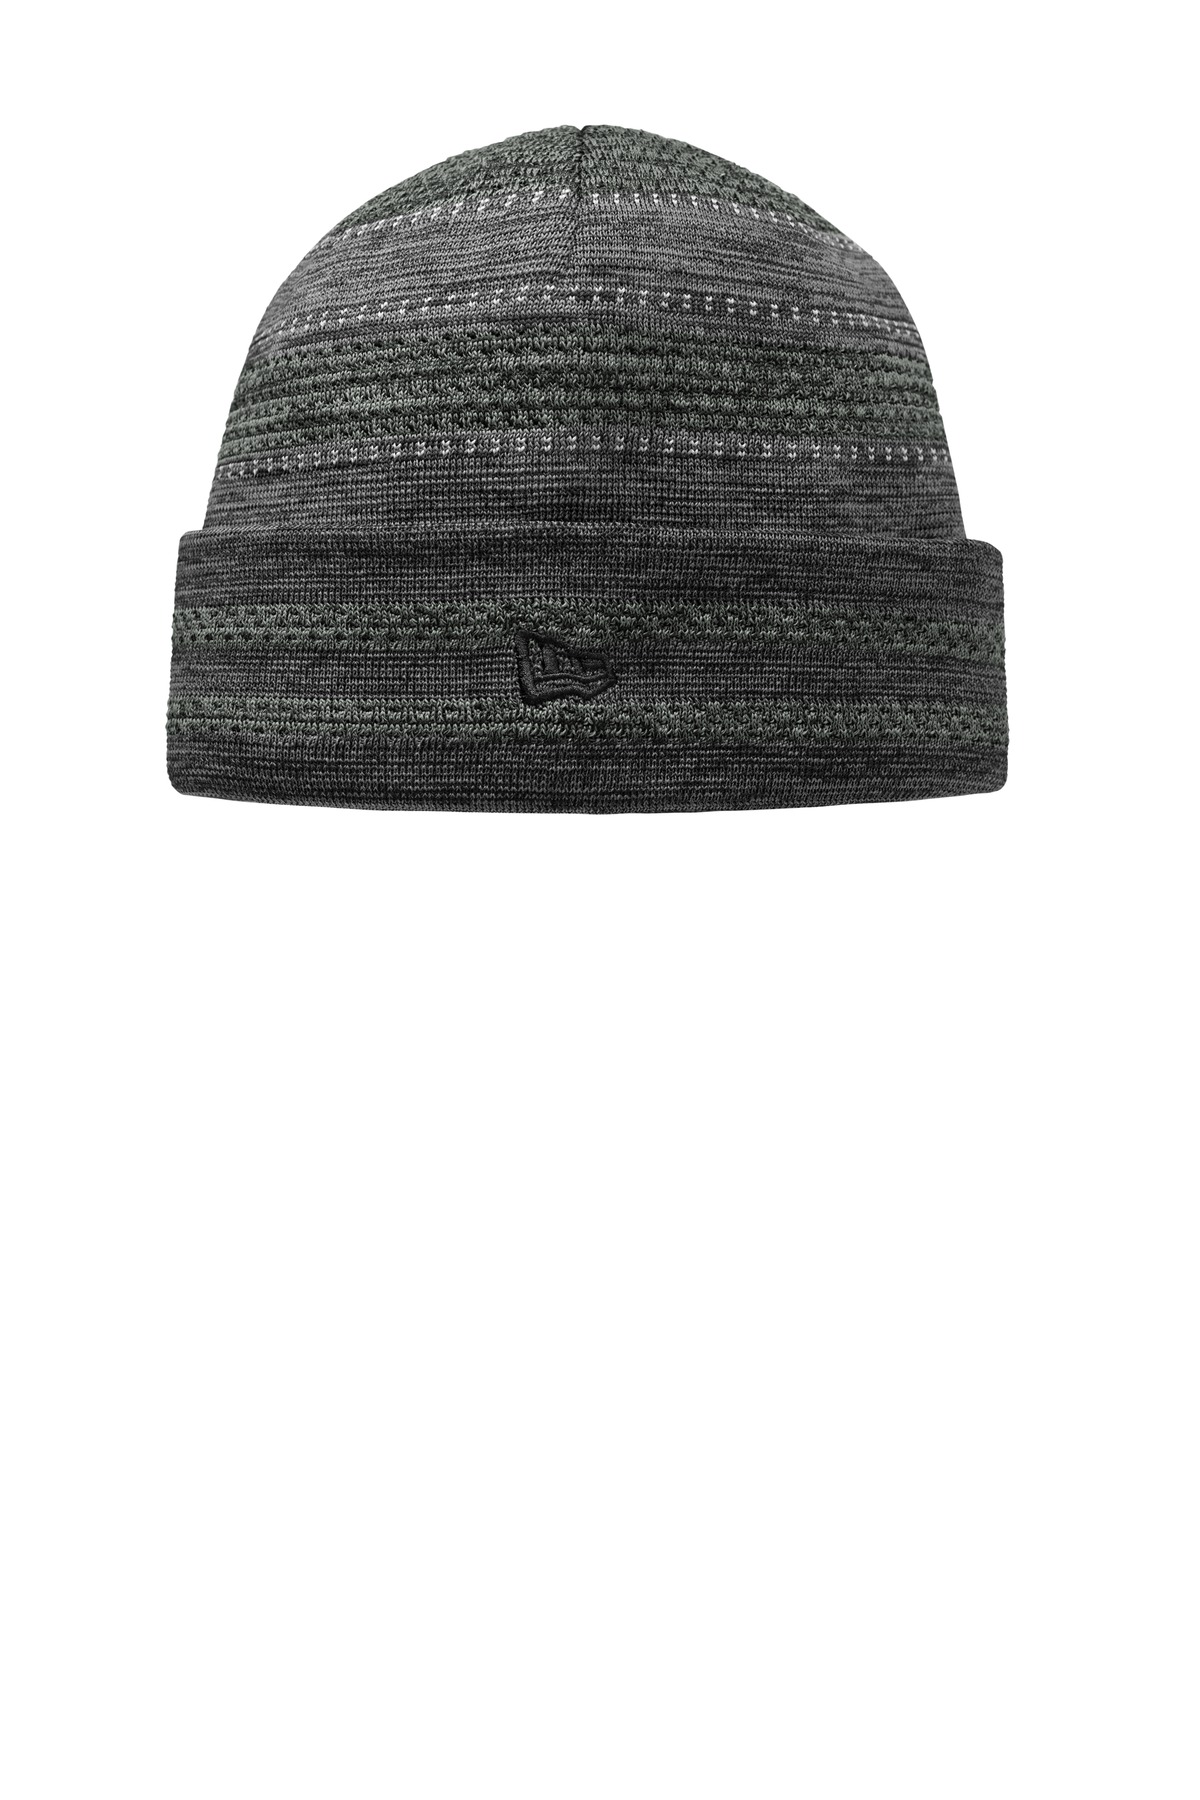 New Era Hospitality Caps ® On-Field Knit Beanie-New Era